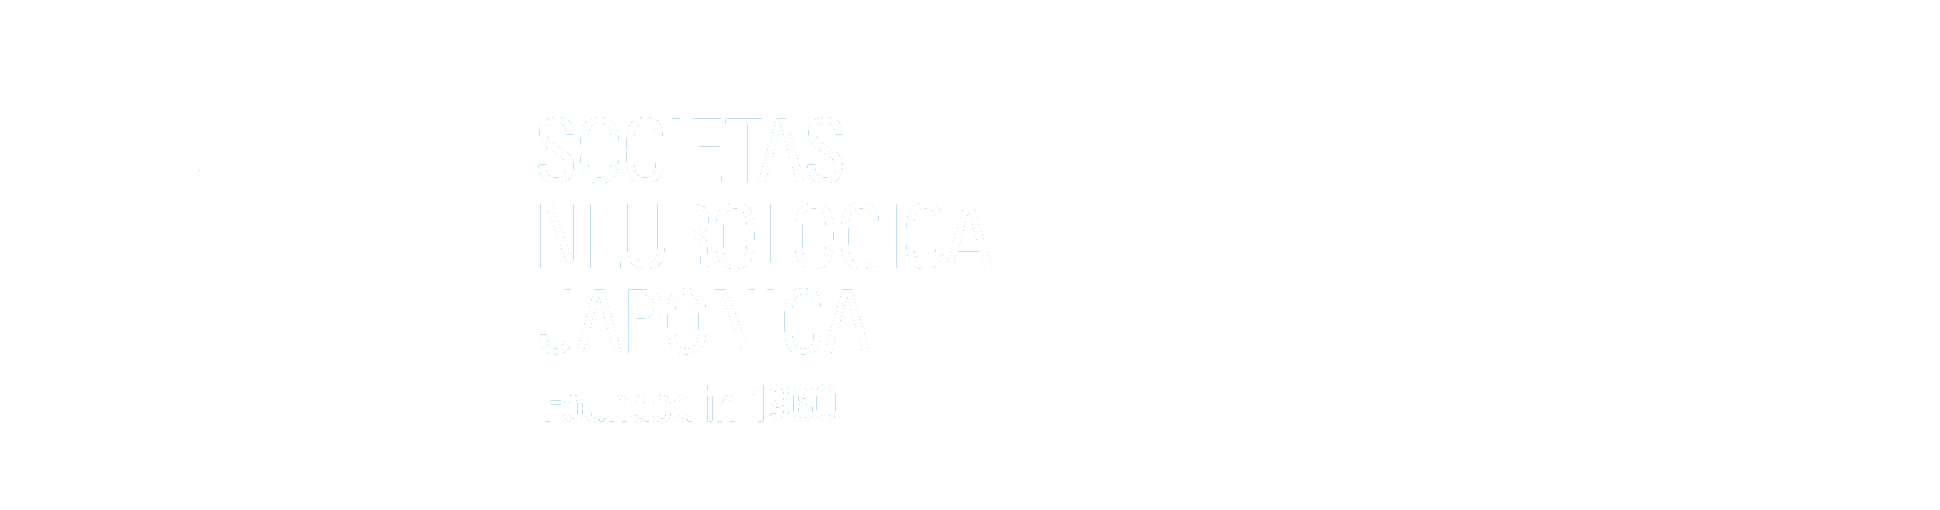 Societas Neurologica Japonica 一般社団法人 日本神経学会